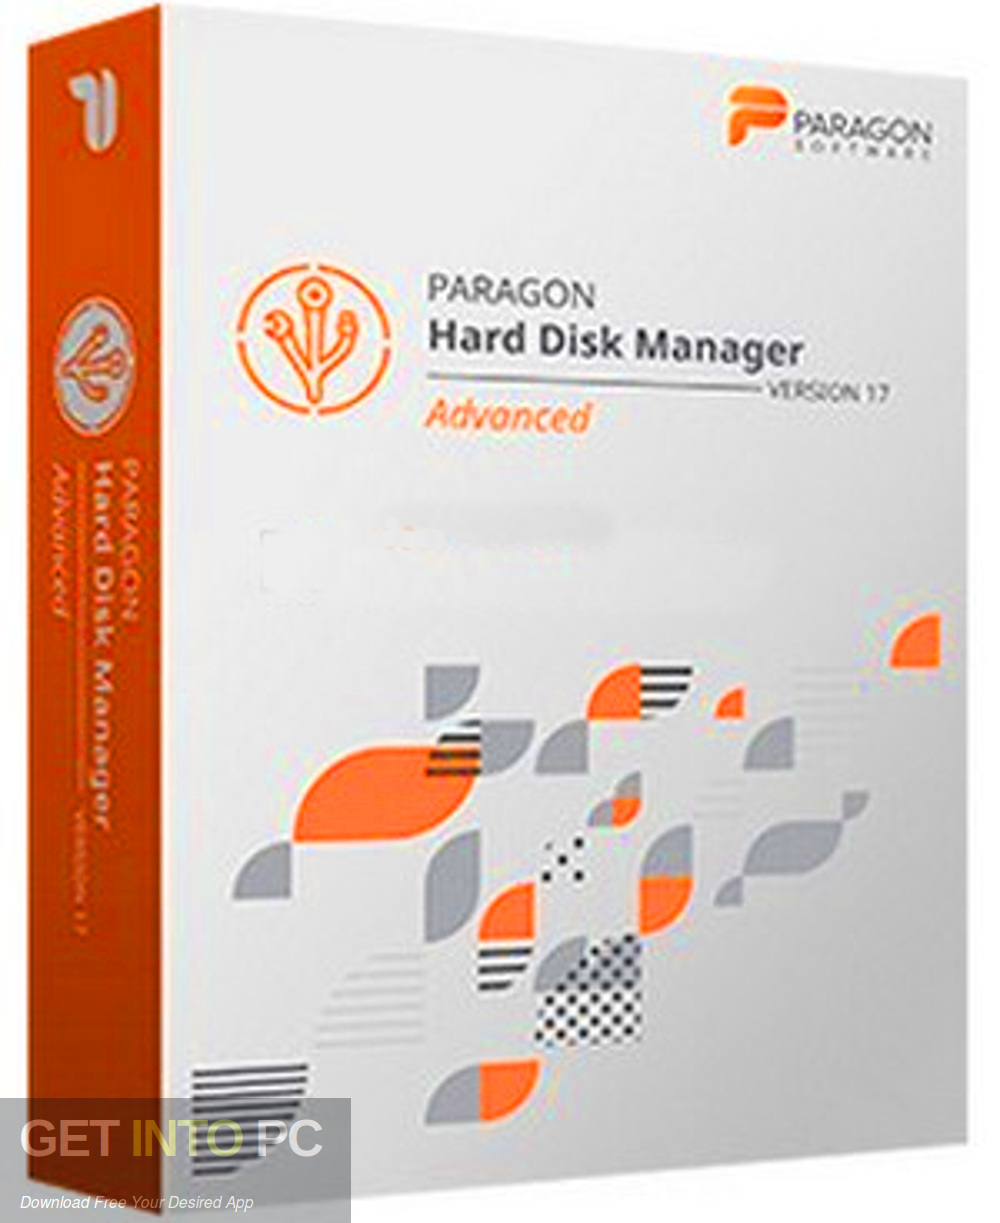 Paragon Hard Disk Manager 2020 Free Download GetintoPC.com